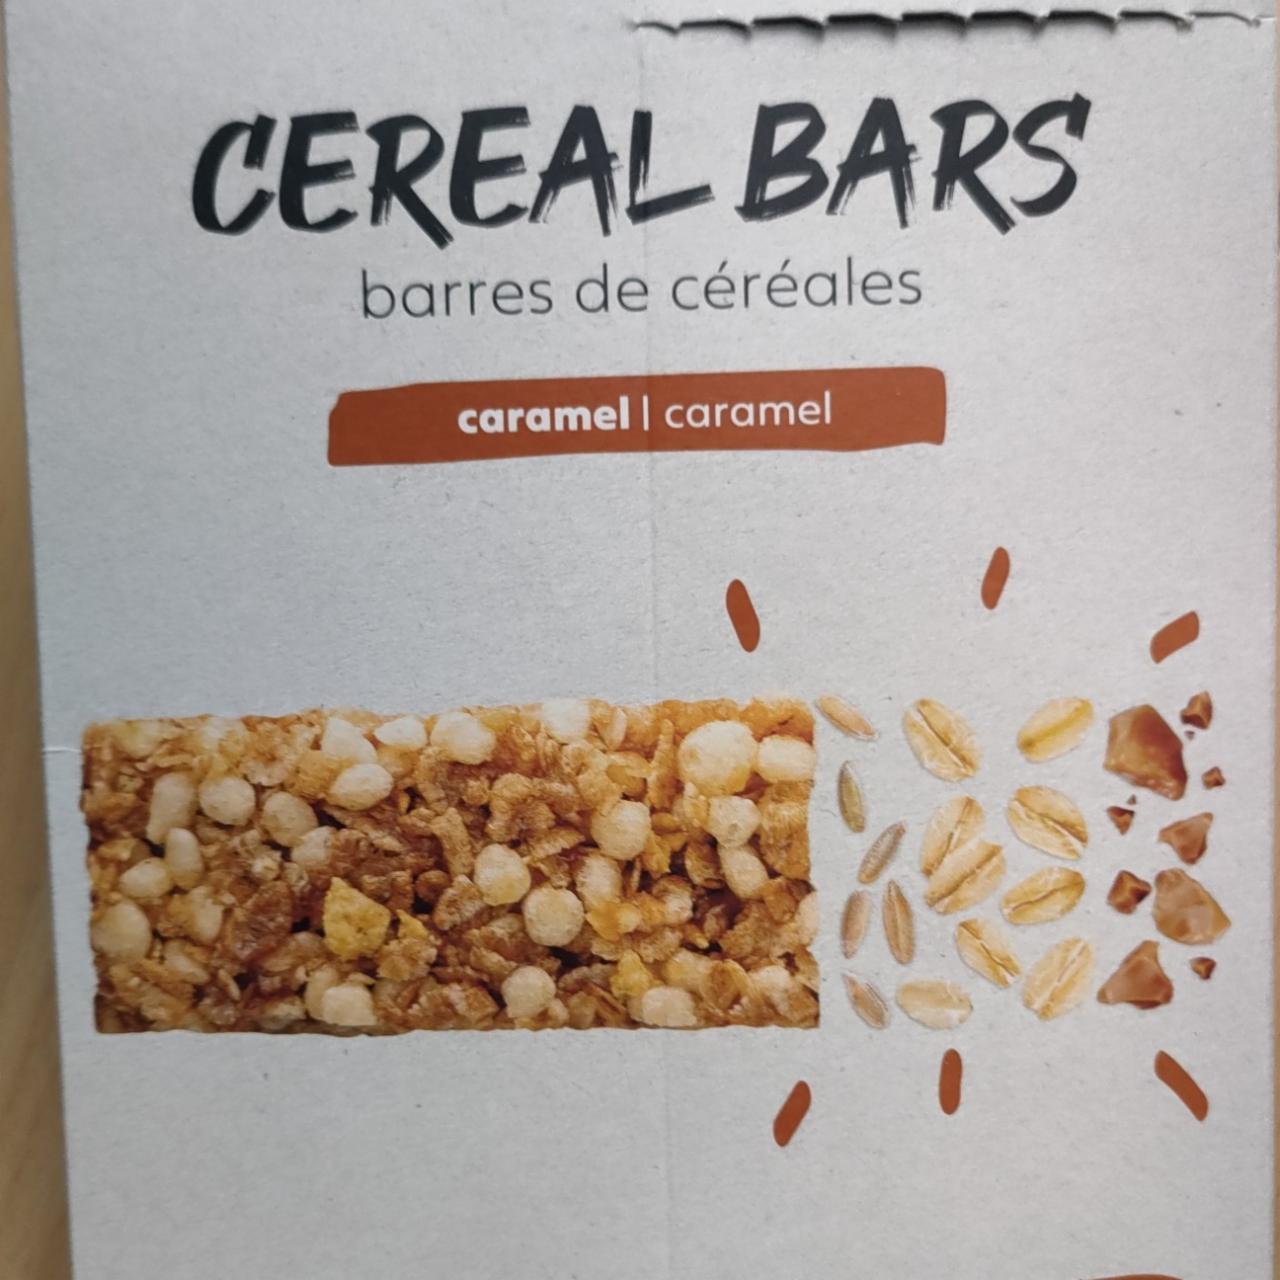 Képek - Cereal bars caramel Decathlon